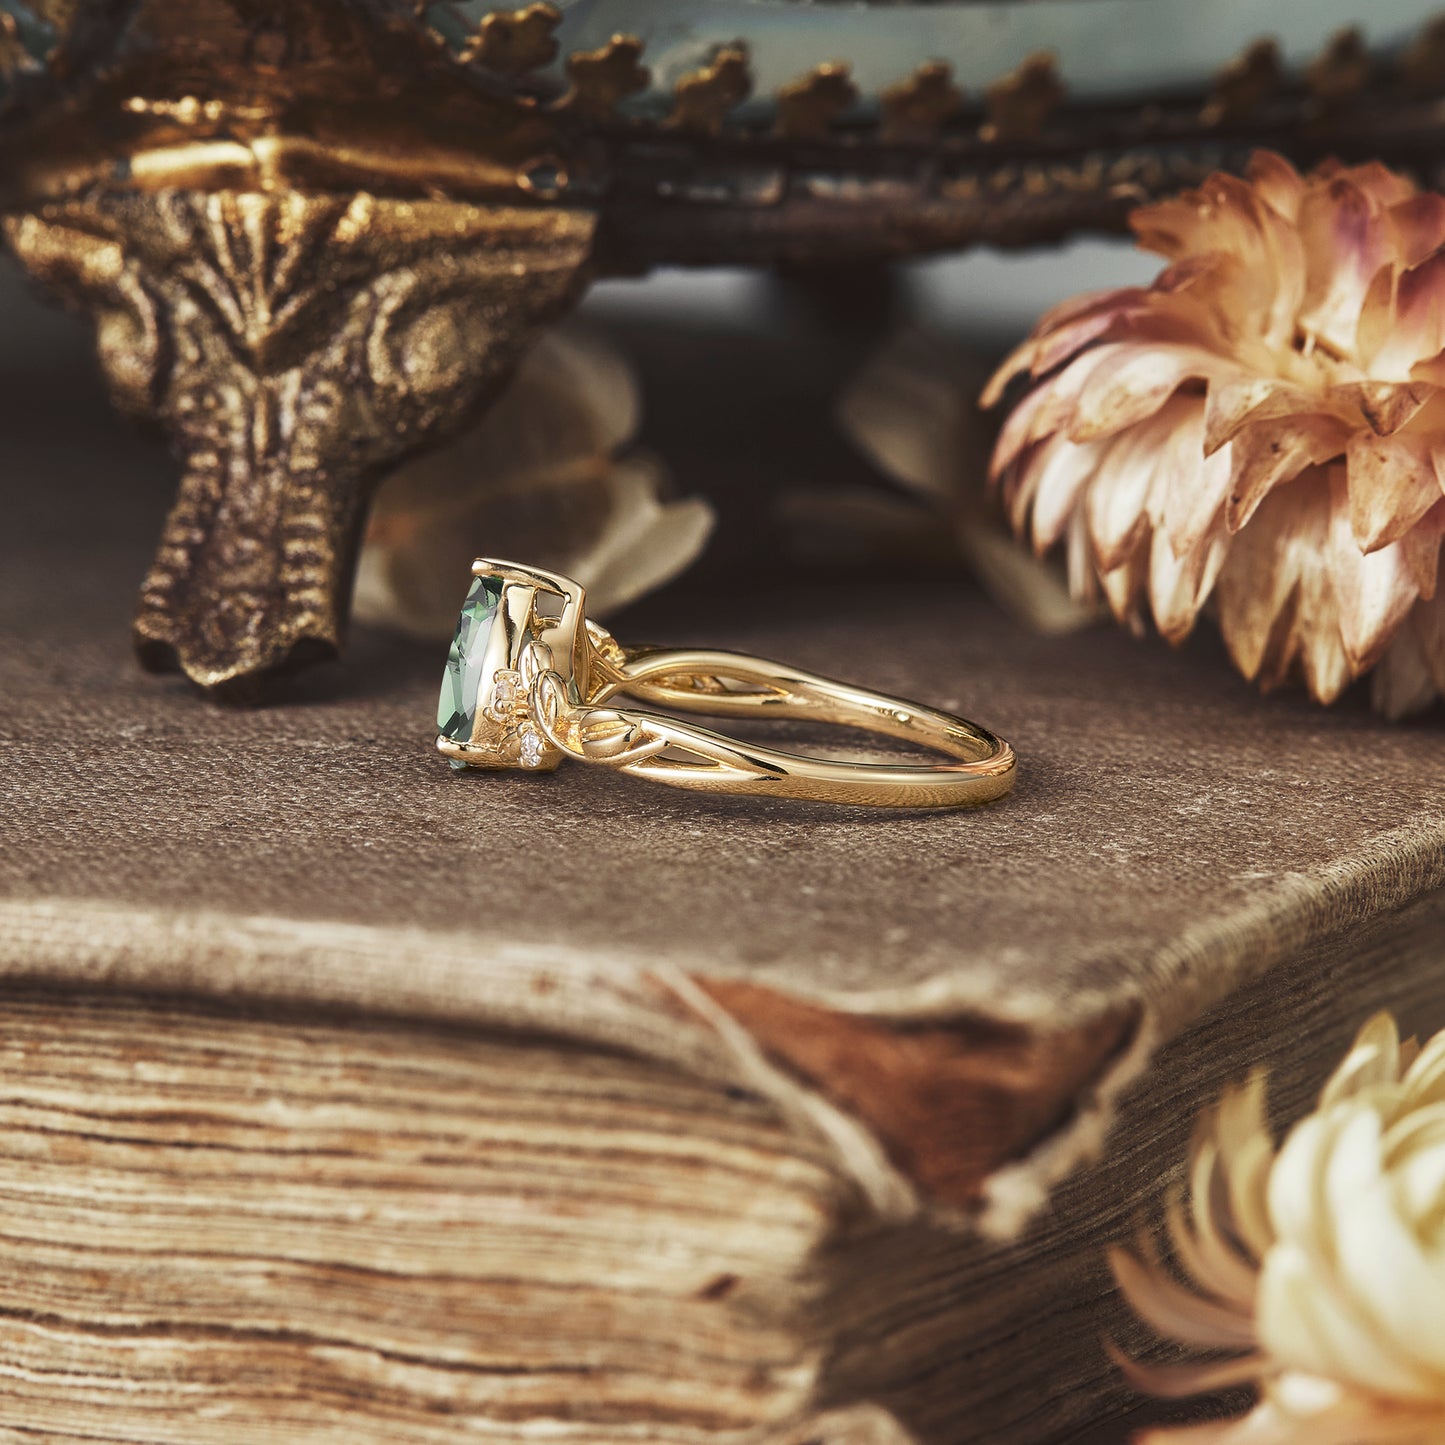 Green Sapphire Ring - Cora